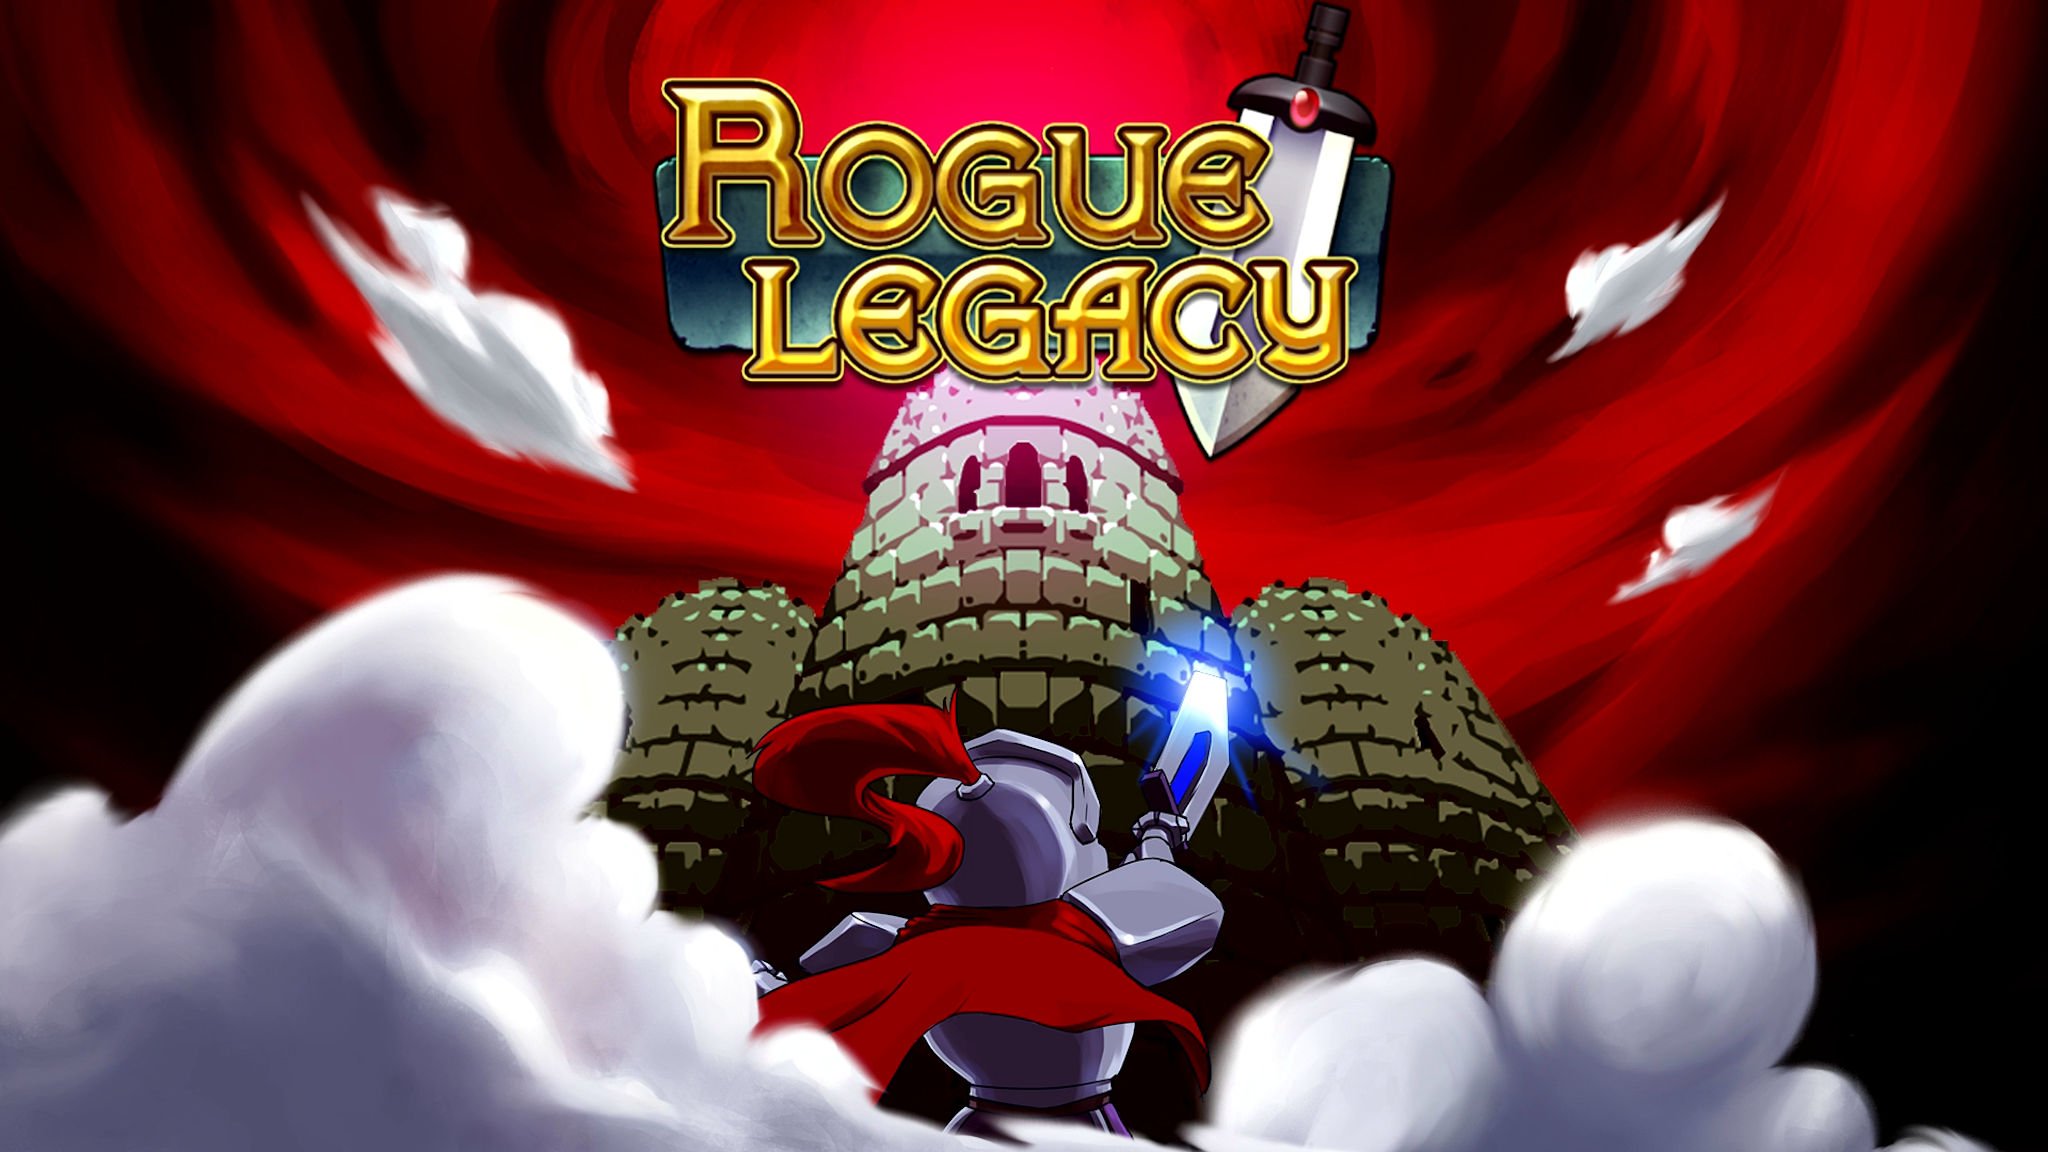 Rogue-Legacy-main.jpg?itok=T6NwYcuR